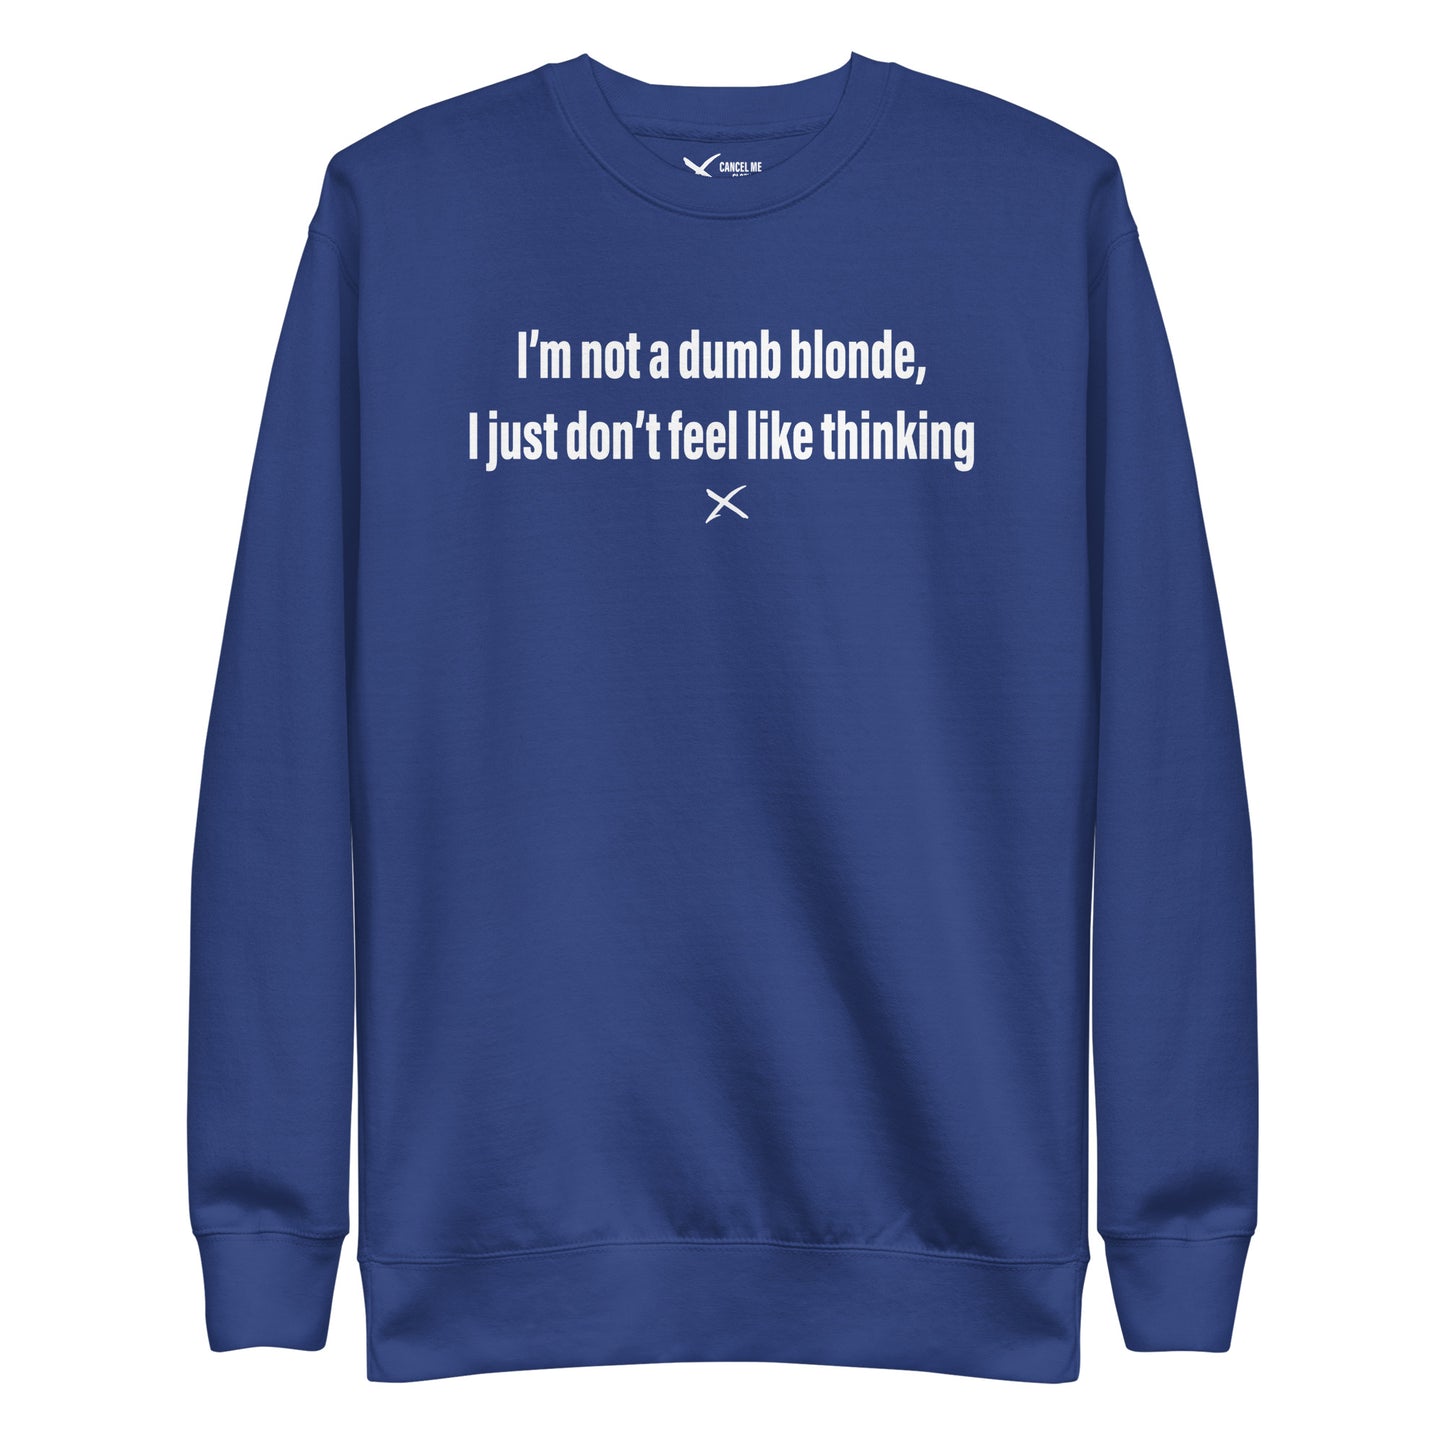 I'm not a dumb blonde, I just don't feel like thinking - Sweatshirt